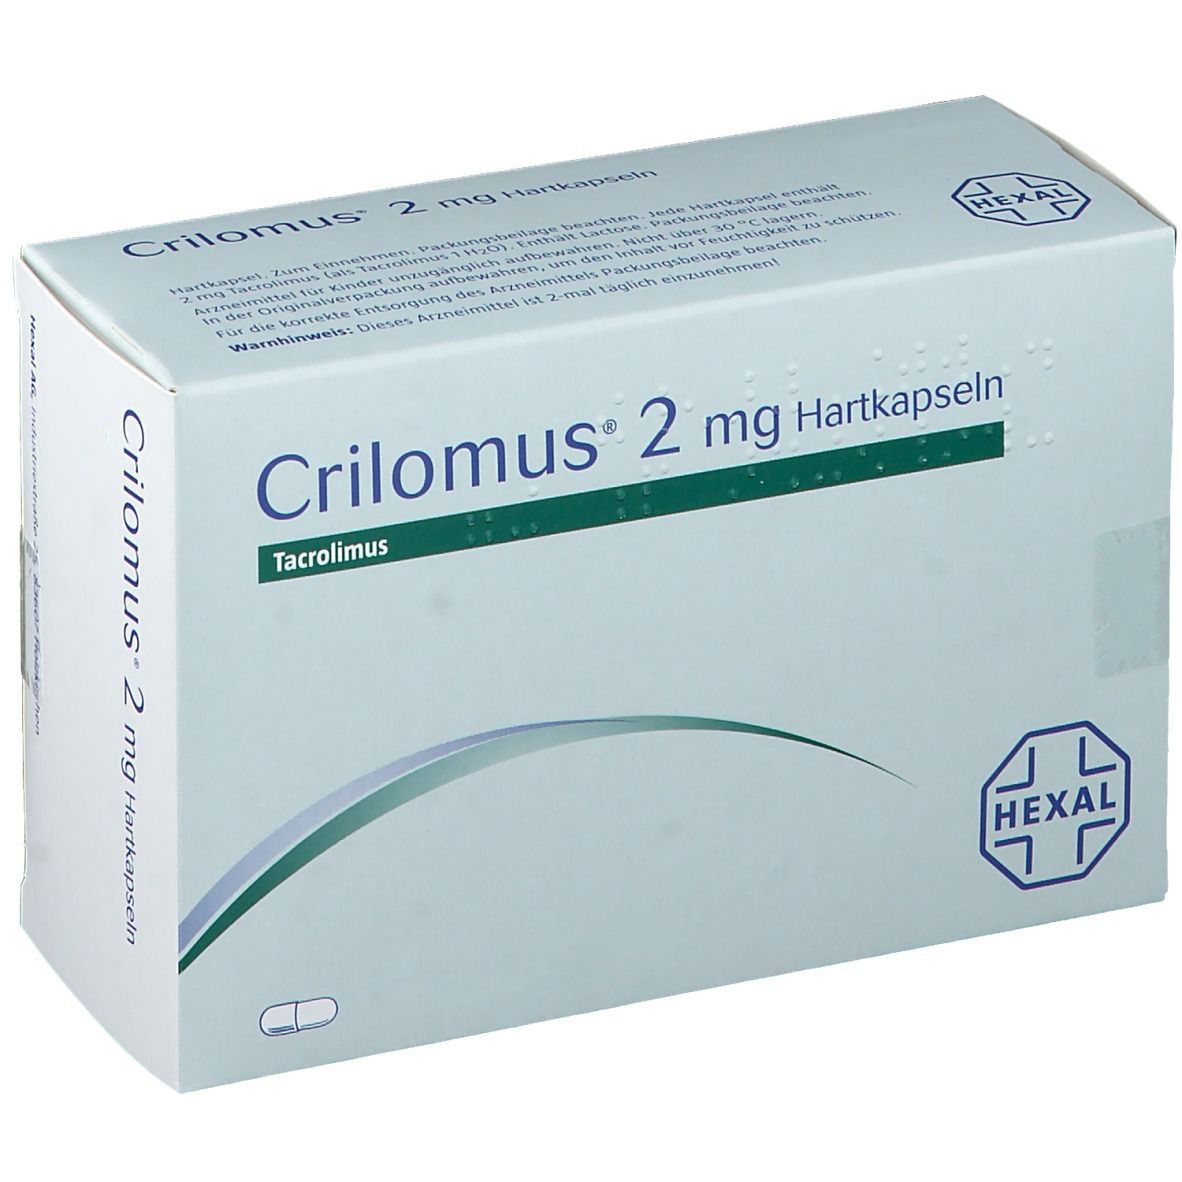 Crilomus® 2 mg